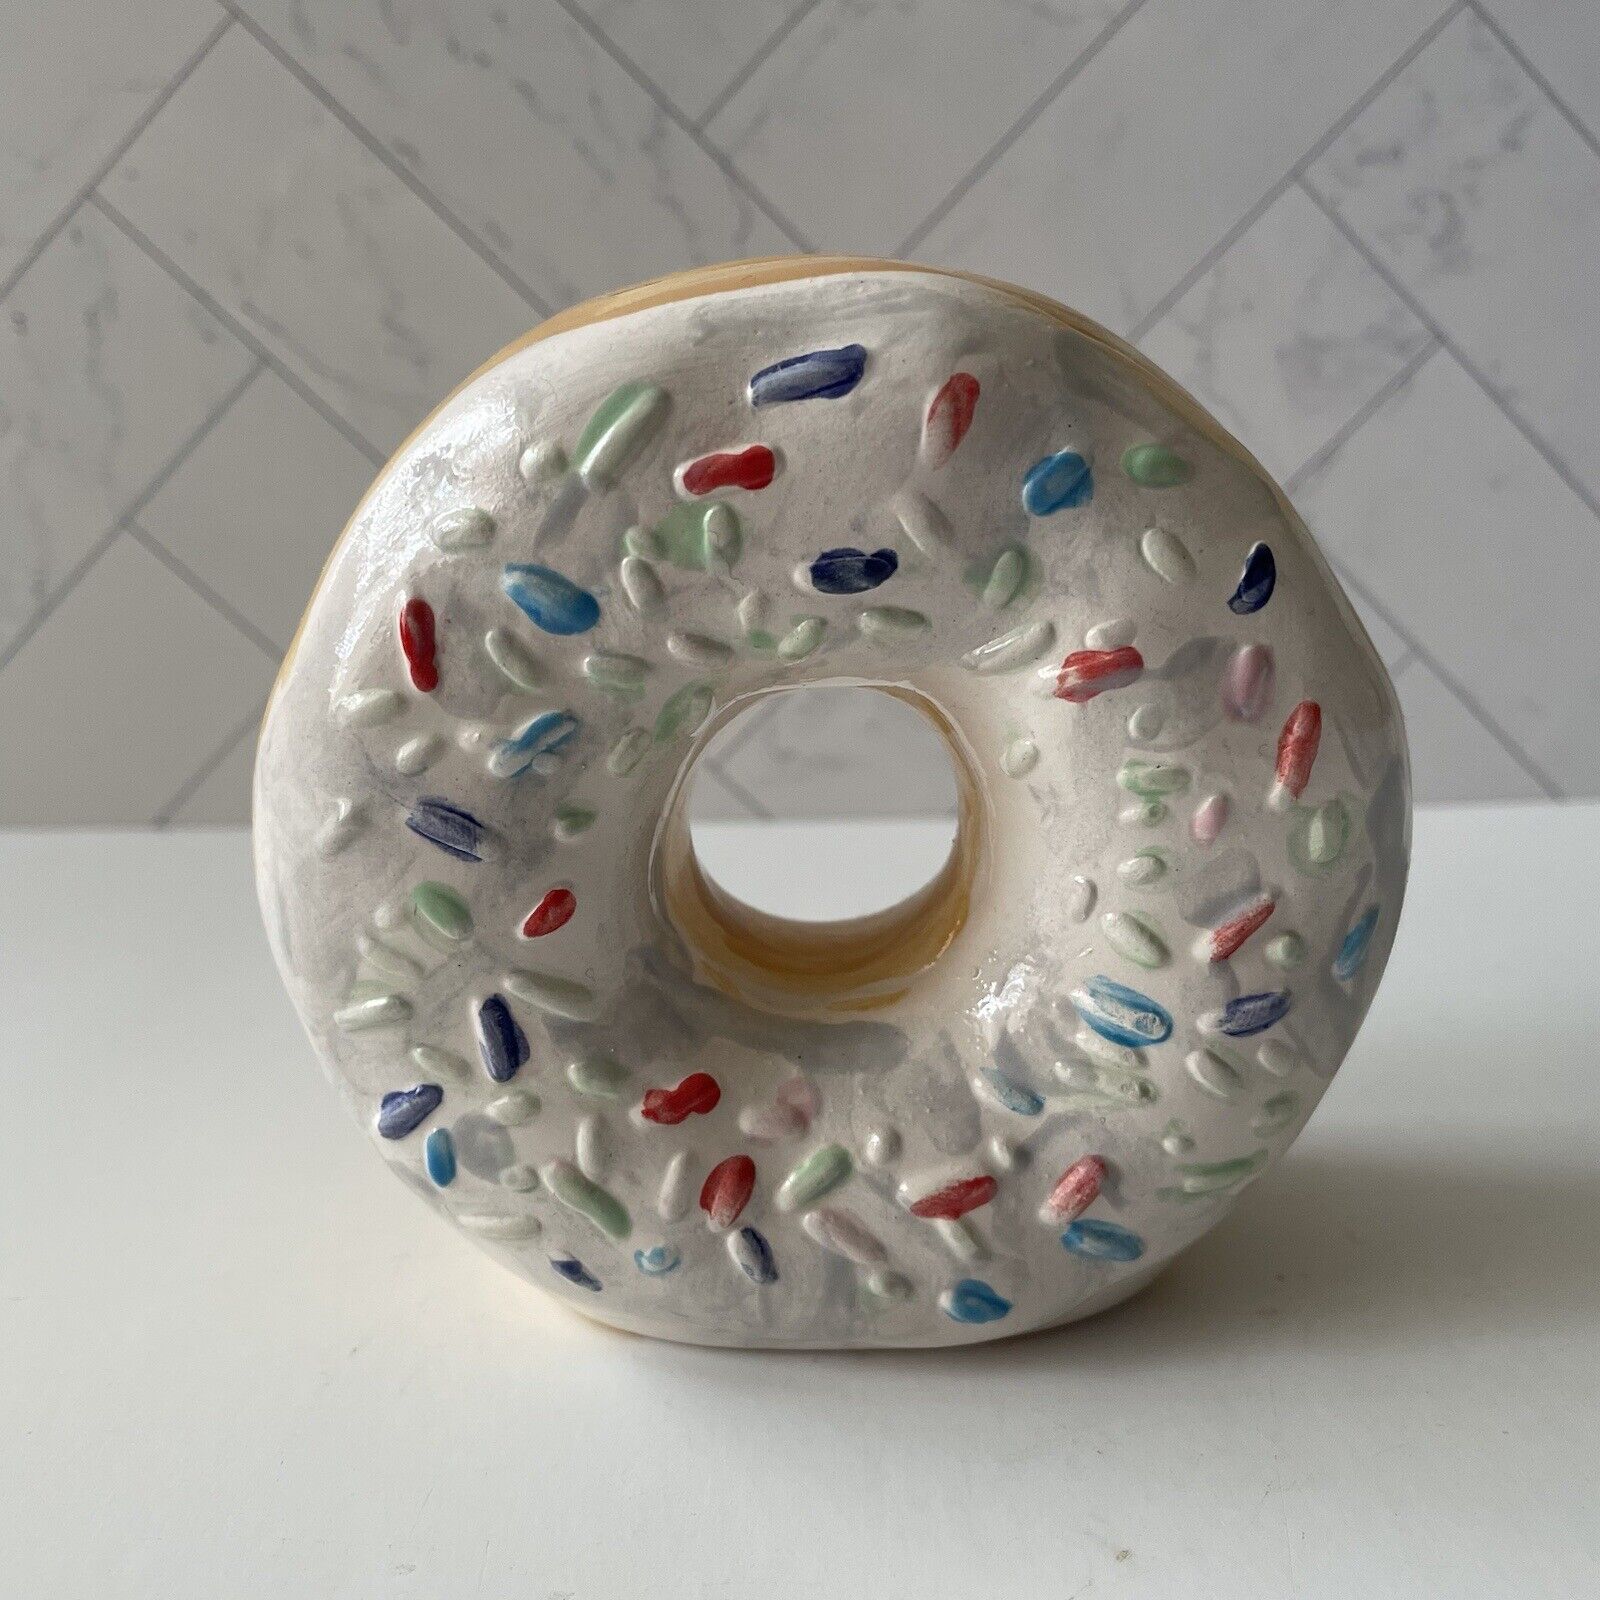 White Glazed Donut with Sprinkles 3.5” Diameter Ceramic Coin Saving Bank